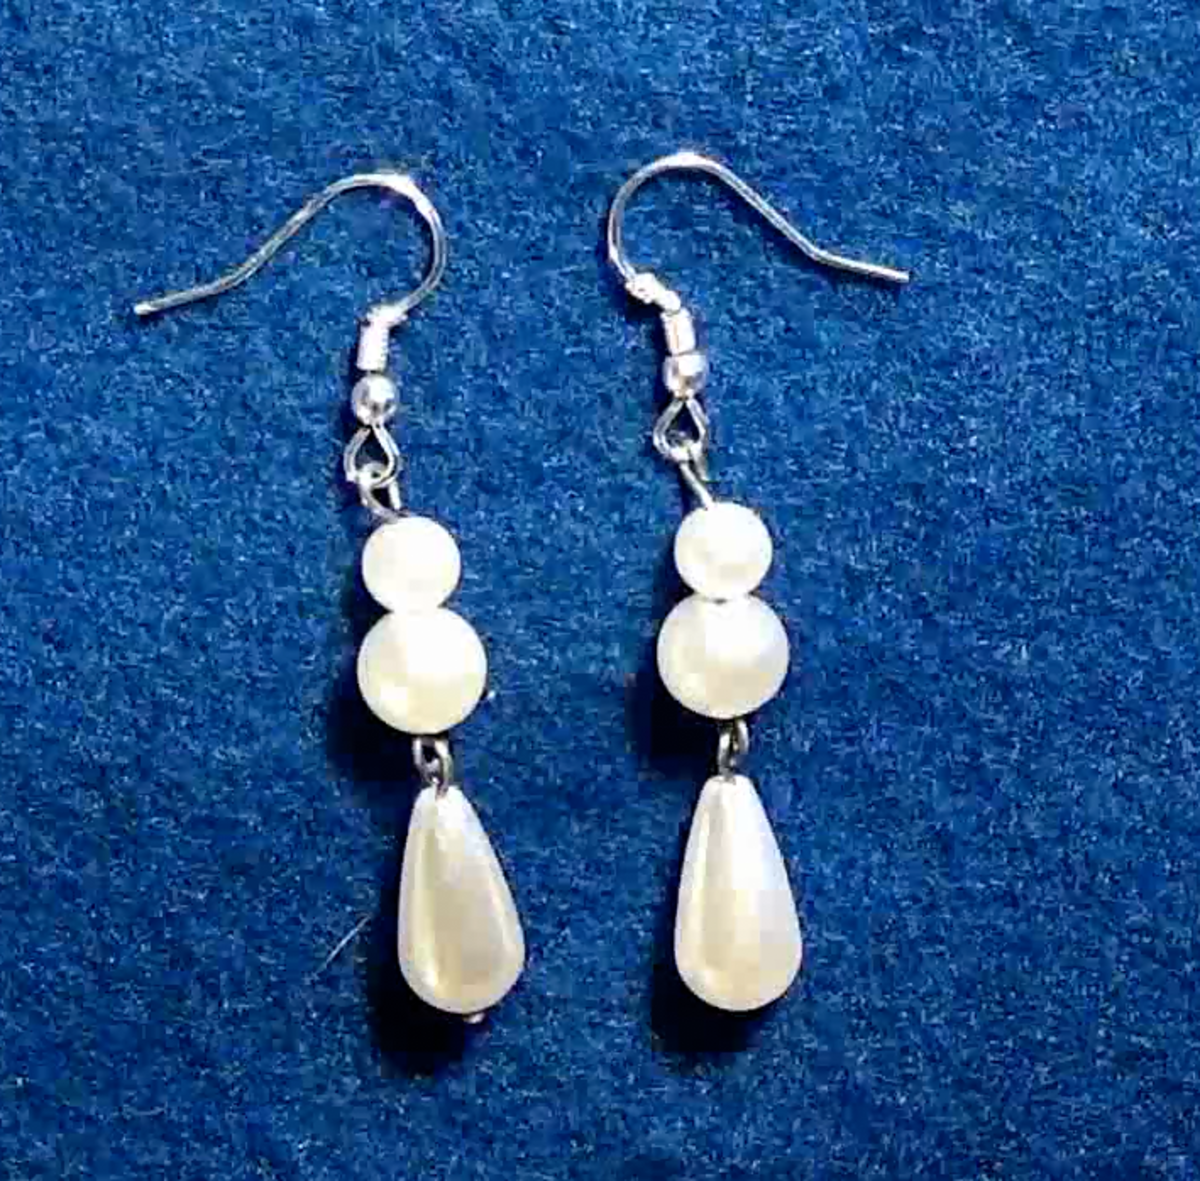 Making a Pair of White Pearl Wedding Earrings